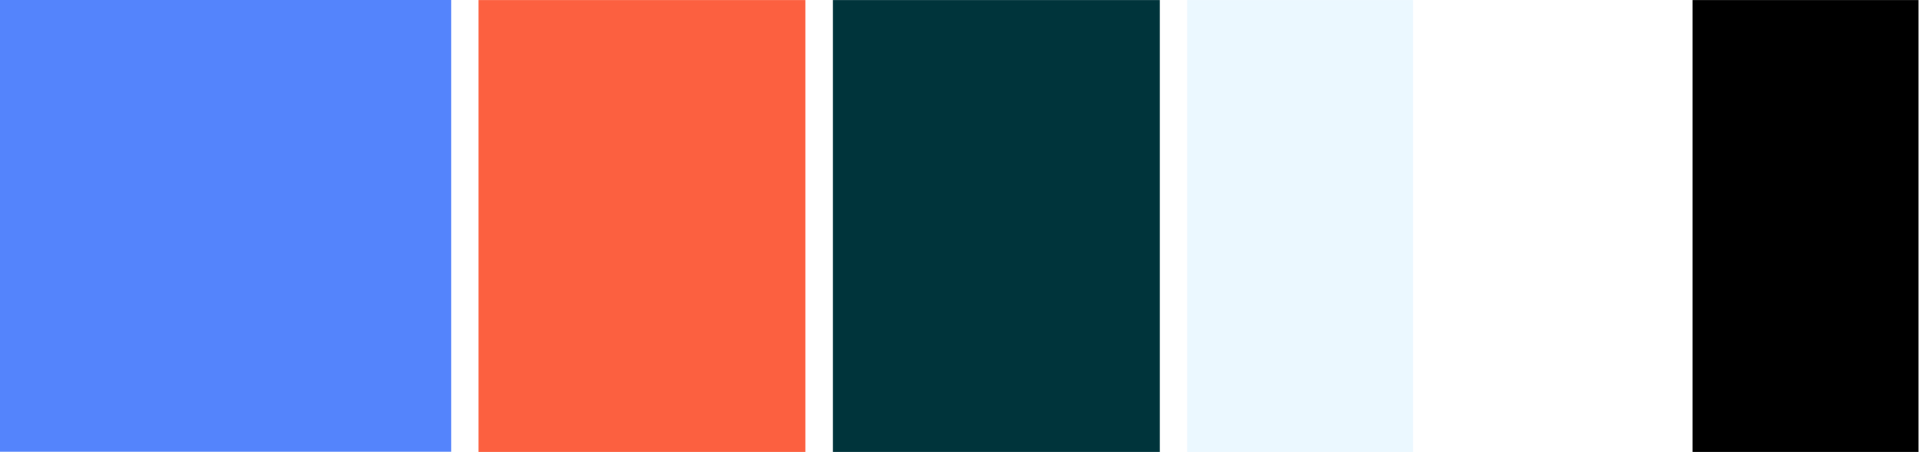 tripdoodler-colors-06-2